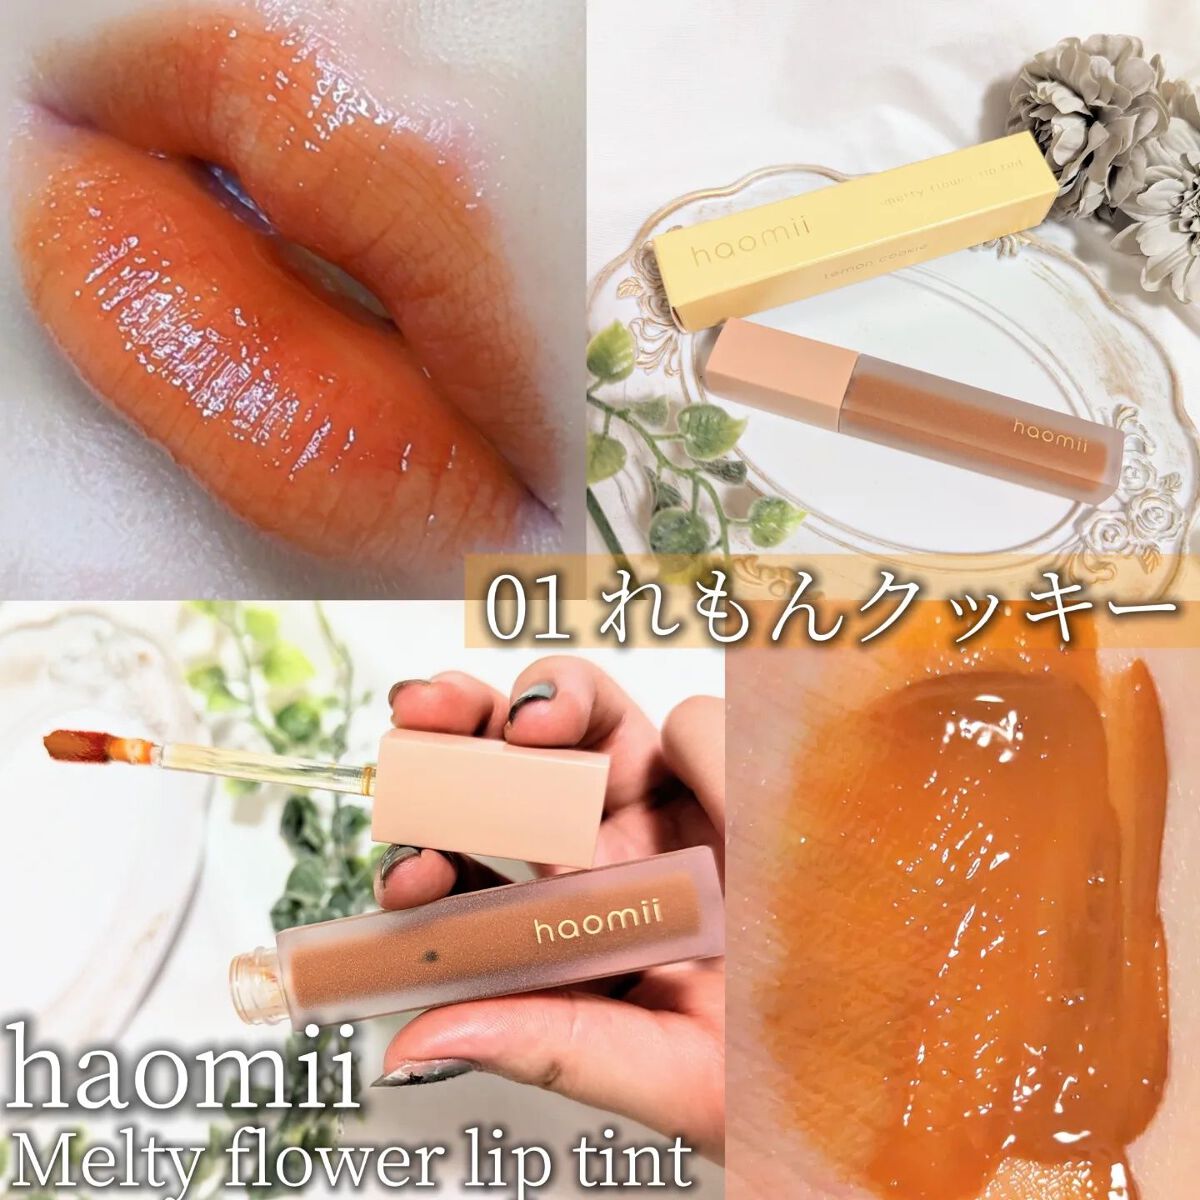 Melty flower lip tint/haomii/口紅 by nini(にに